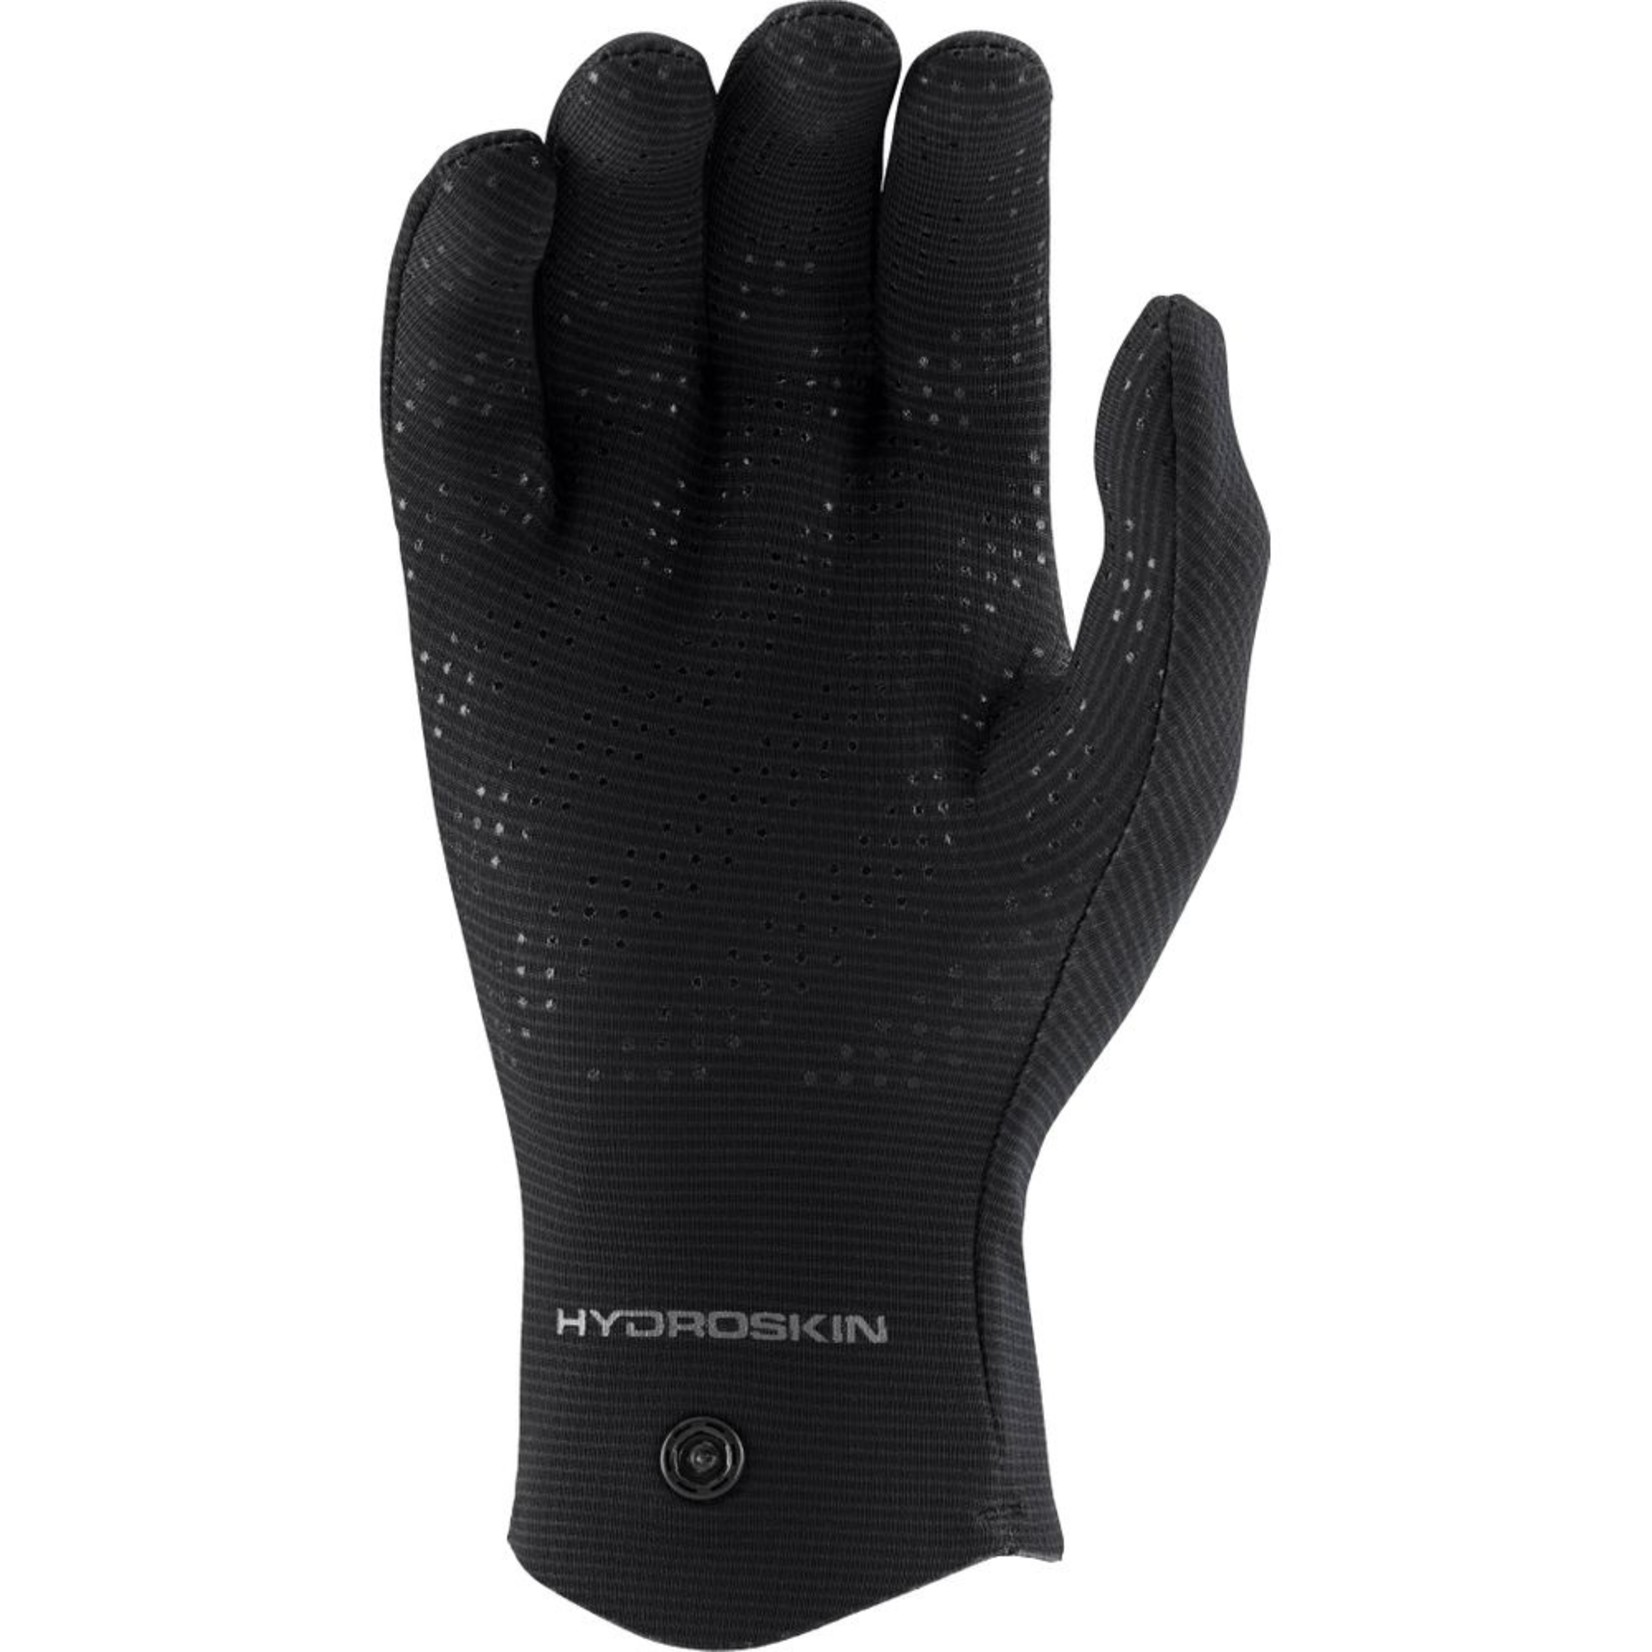 NRS NRS Men's HydroSkin Gloves